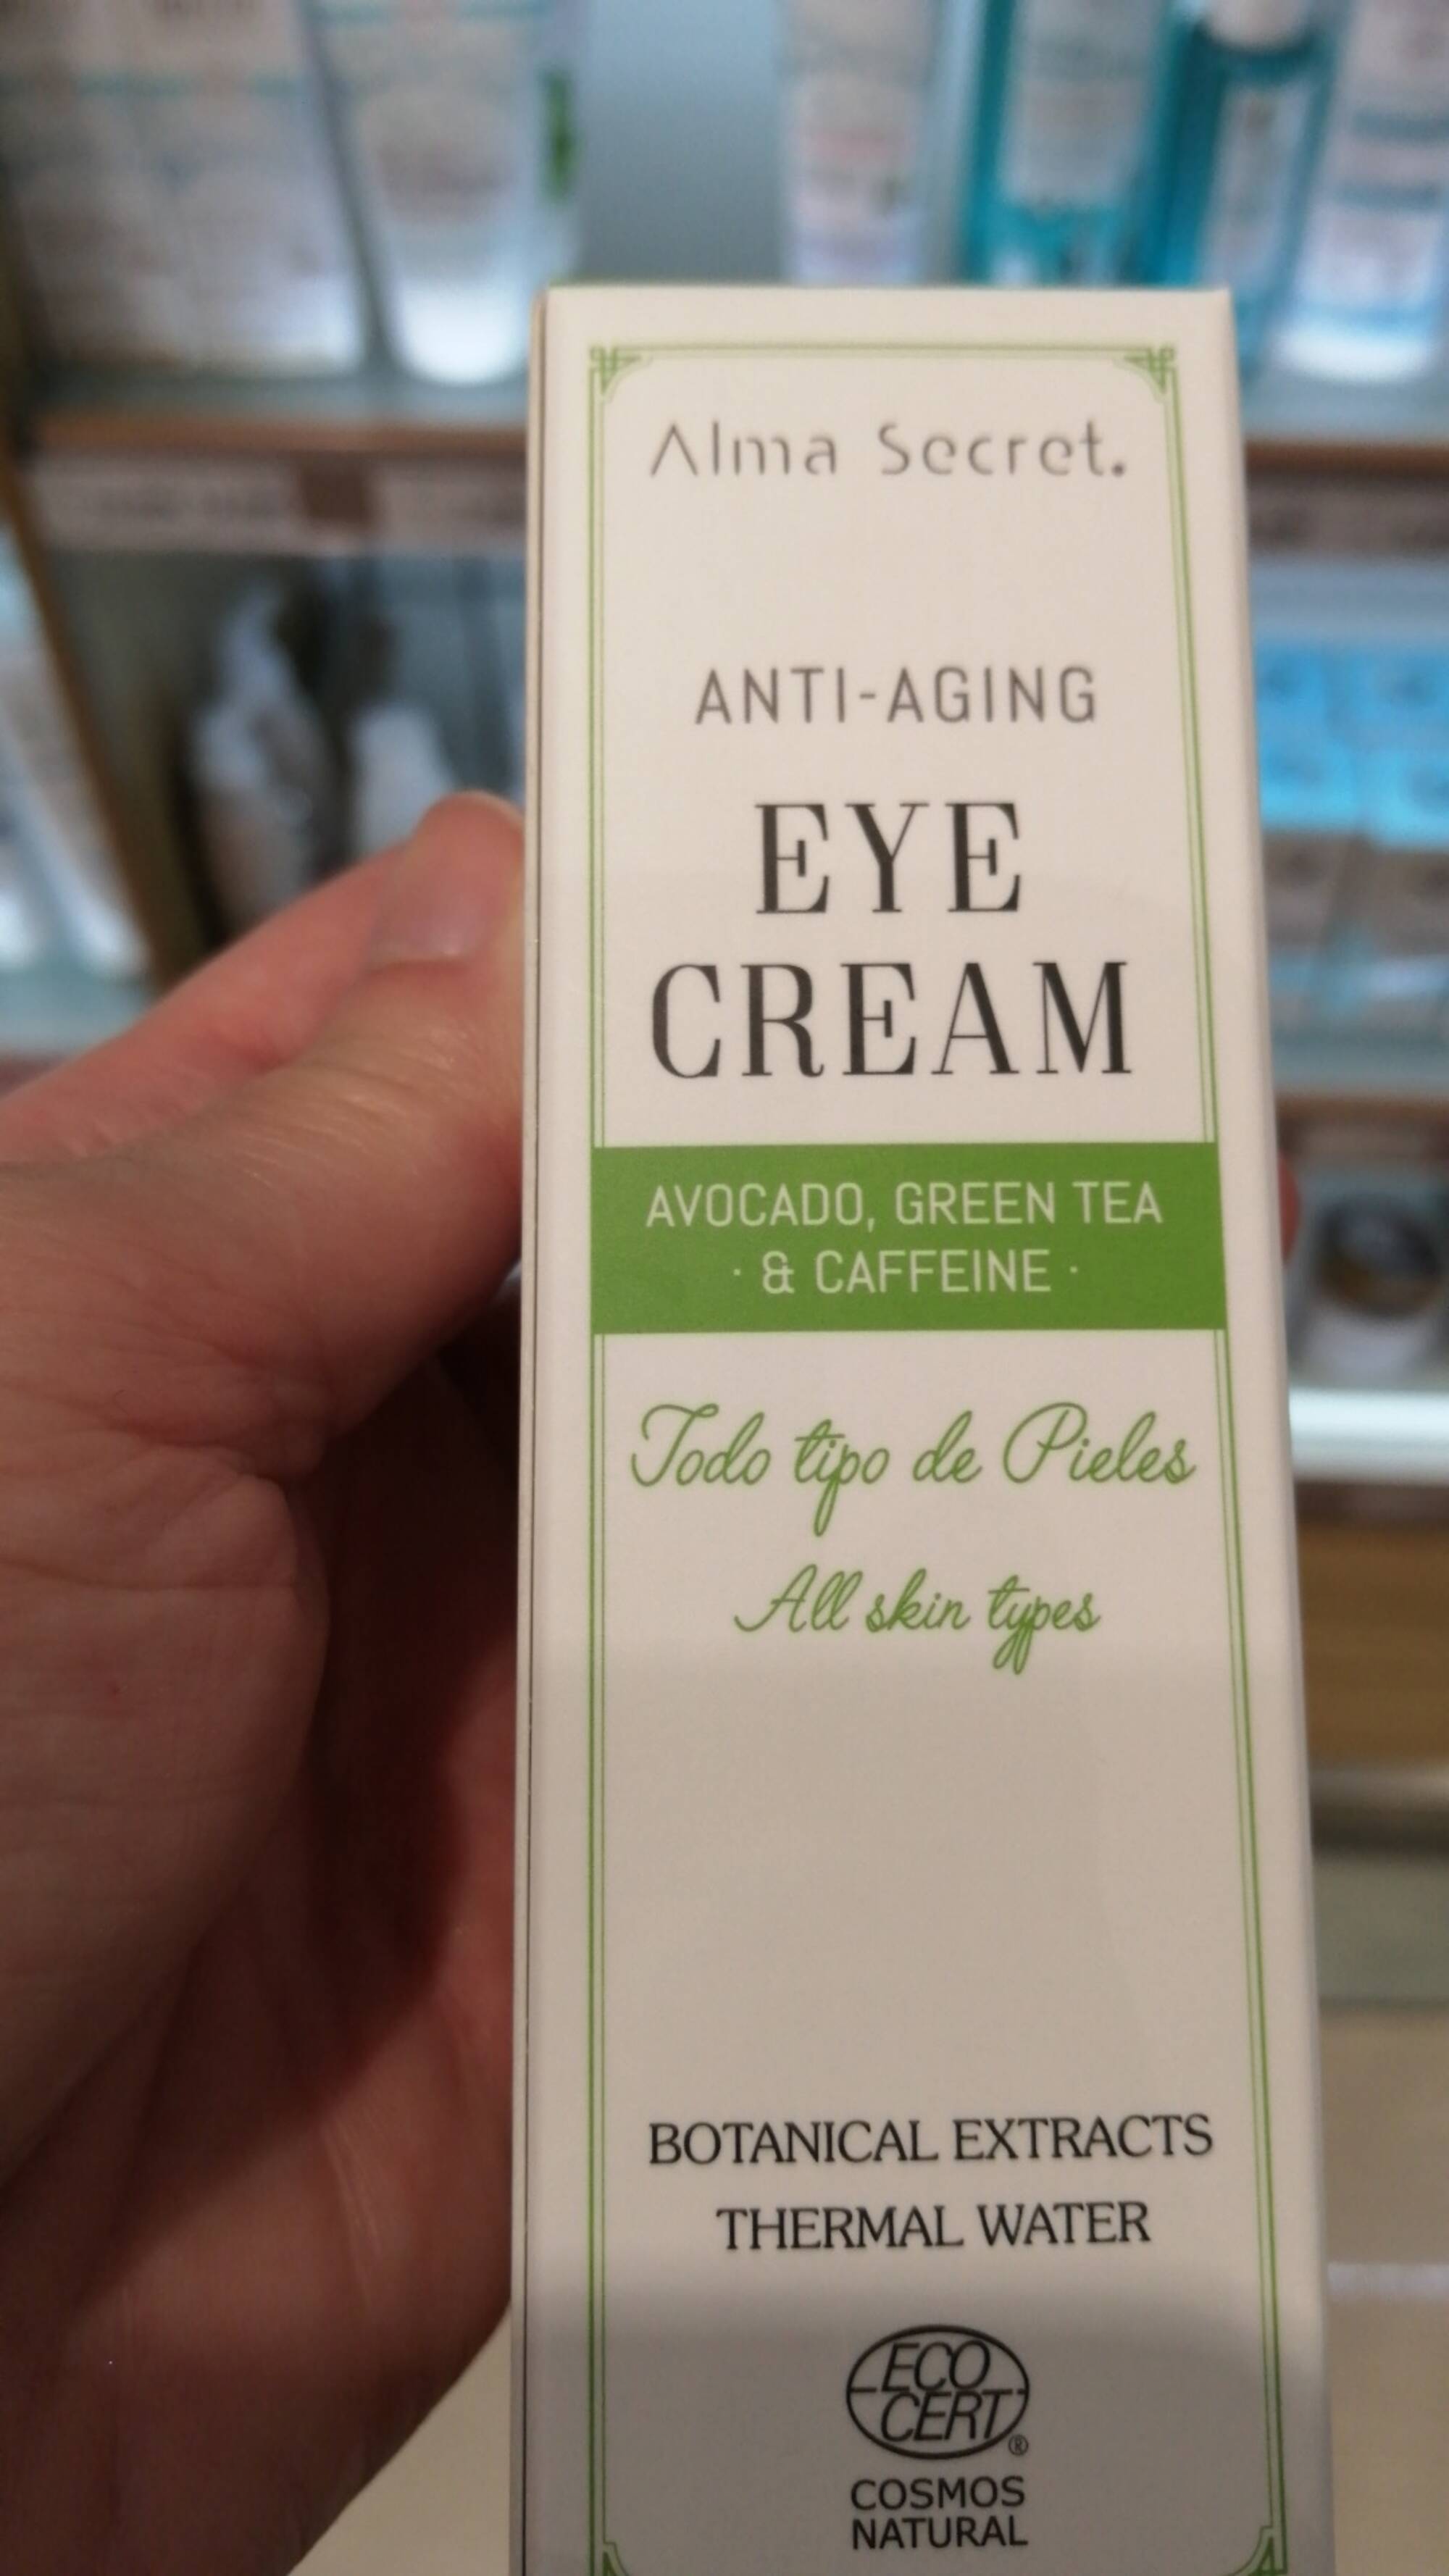 ALMA SECRET - Anti-aging - Eye cream